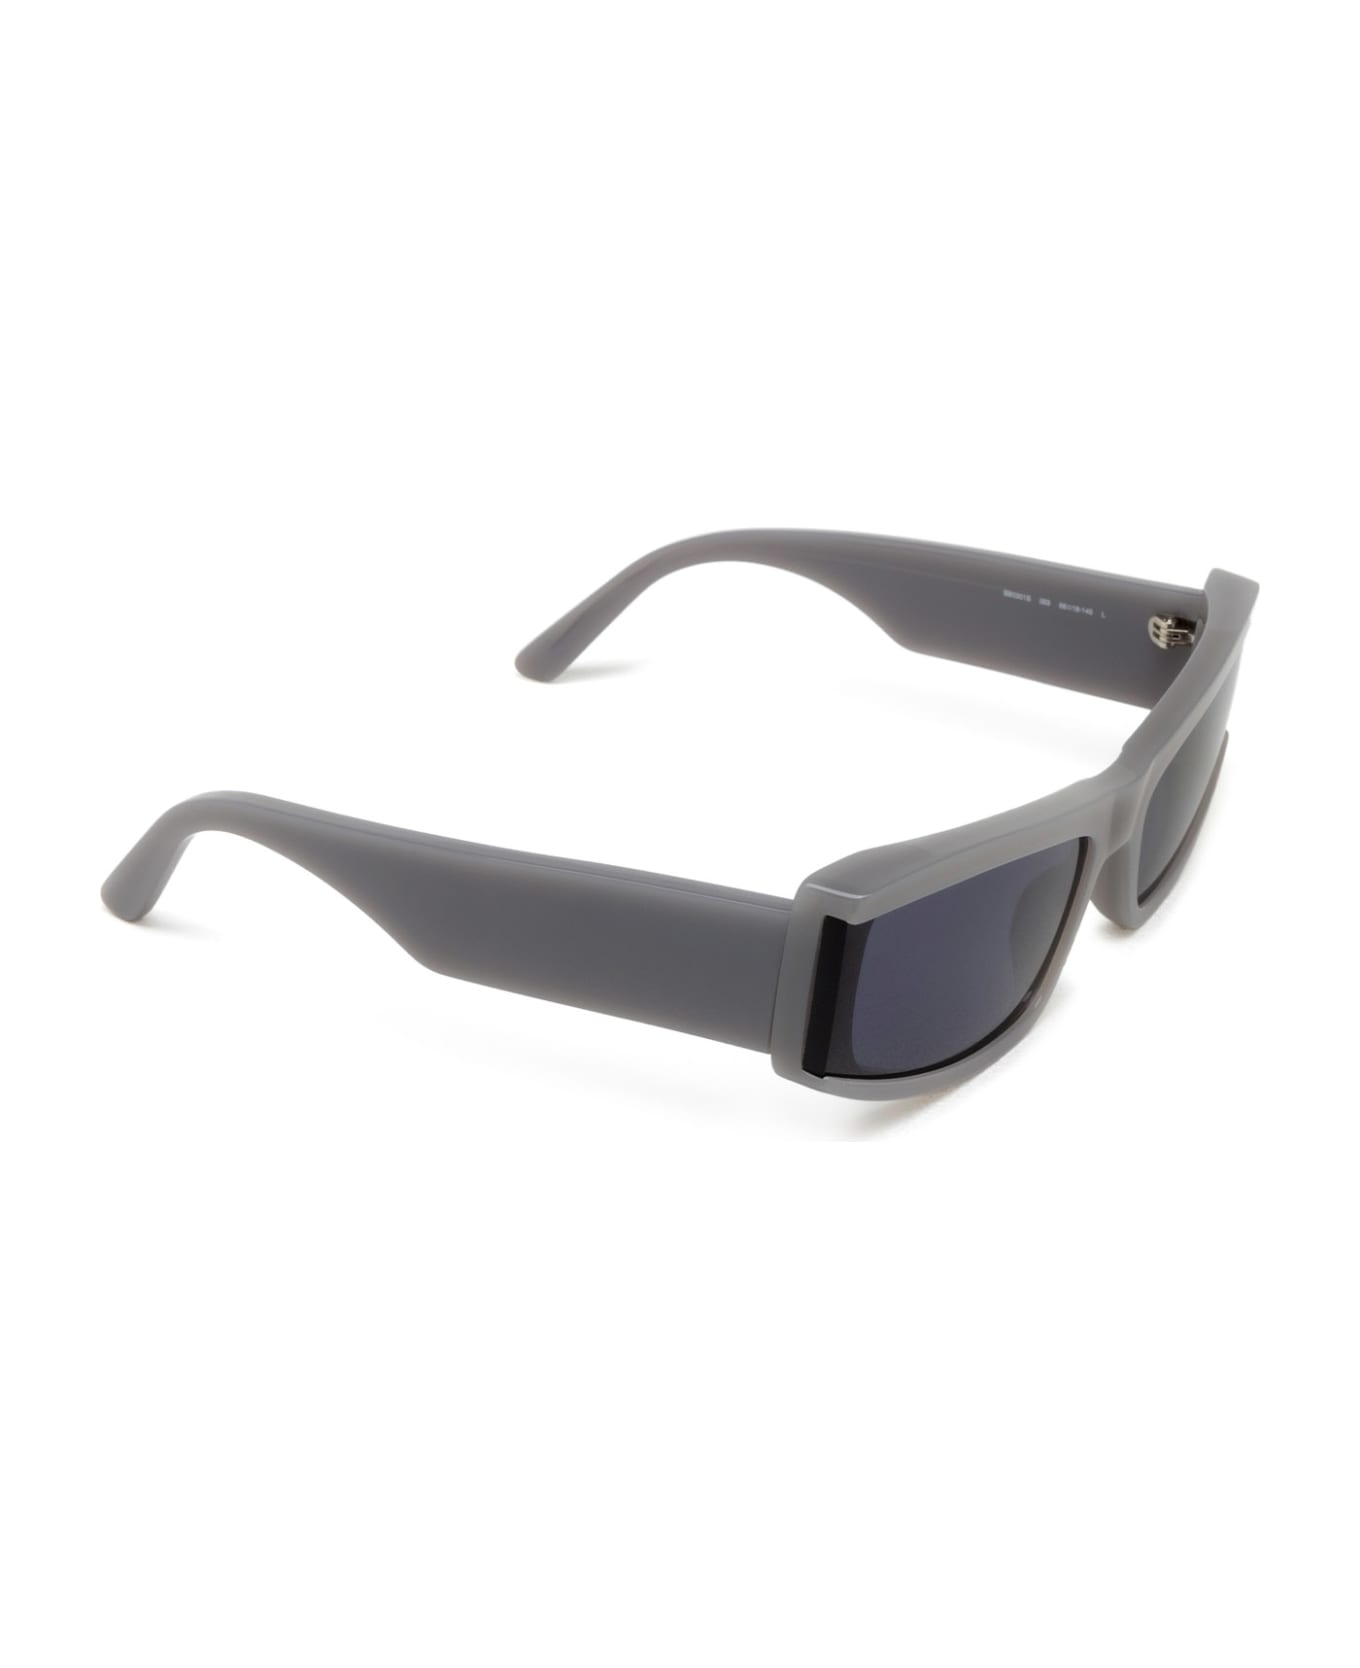 Balenciaga Eyewear Bb0301s Sunglasses - Grey